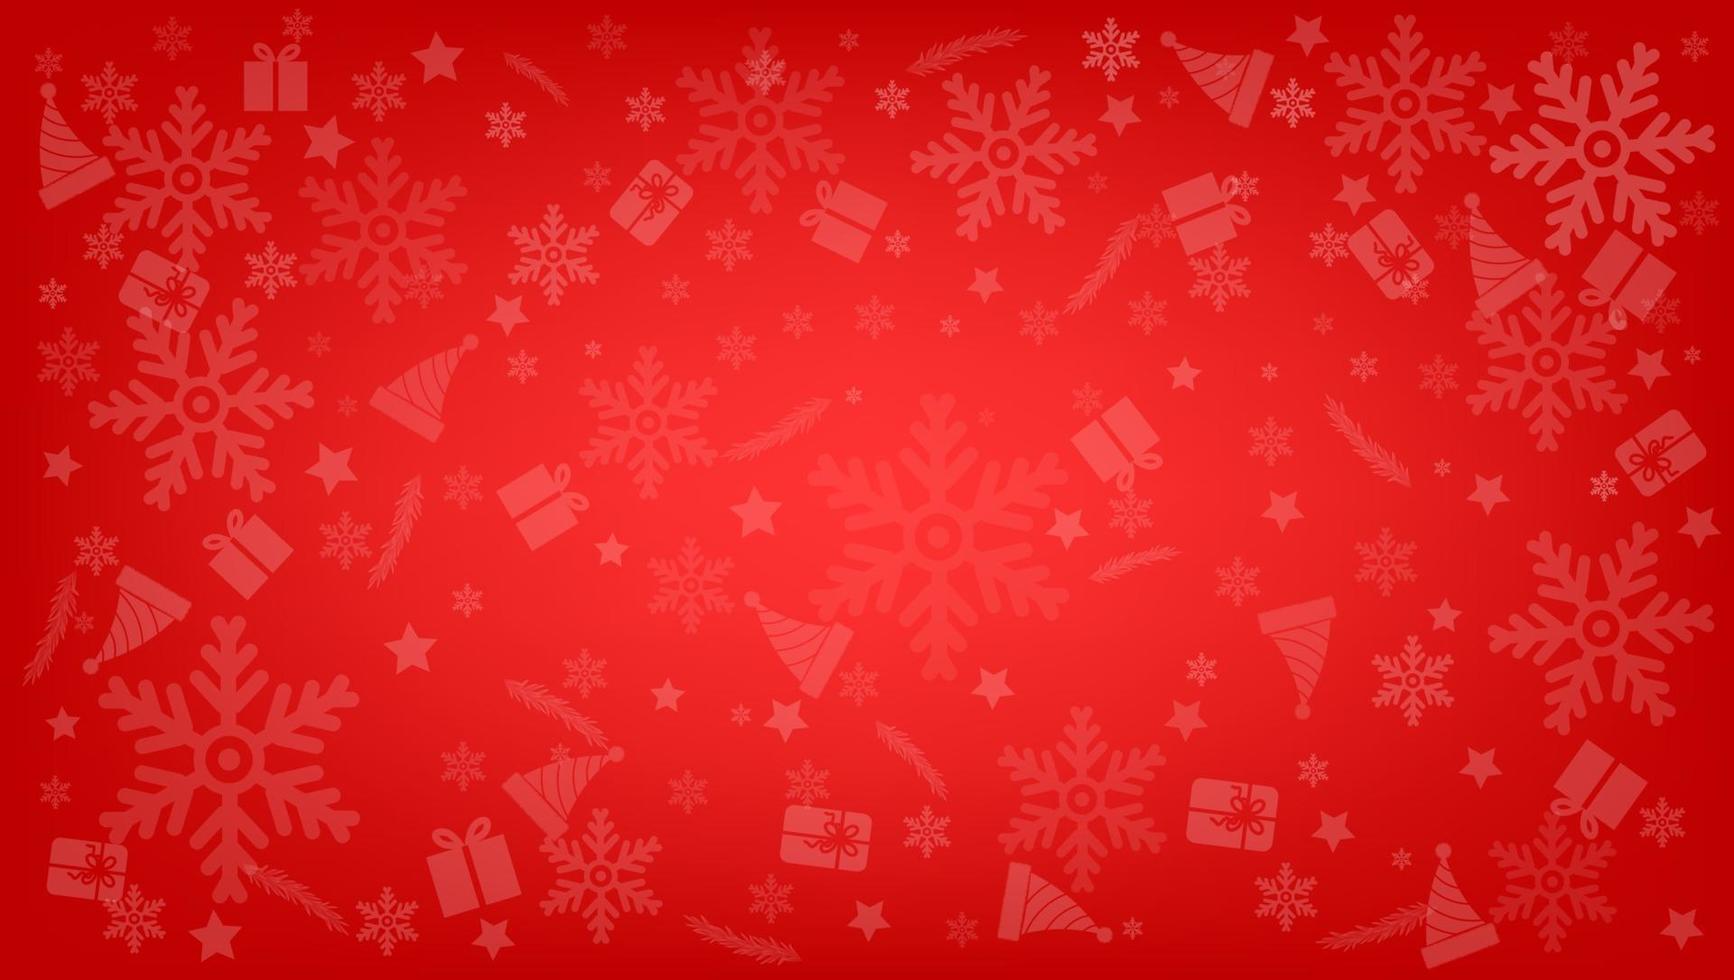 Weihnachtsobjekt auf roter Hintergrundvektorillustration vektor